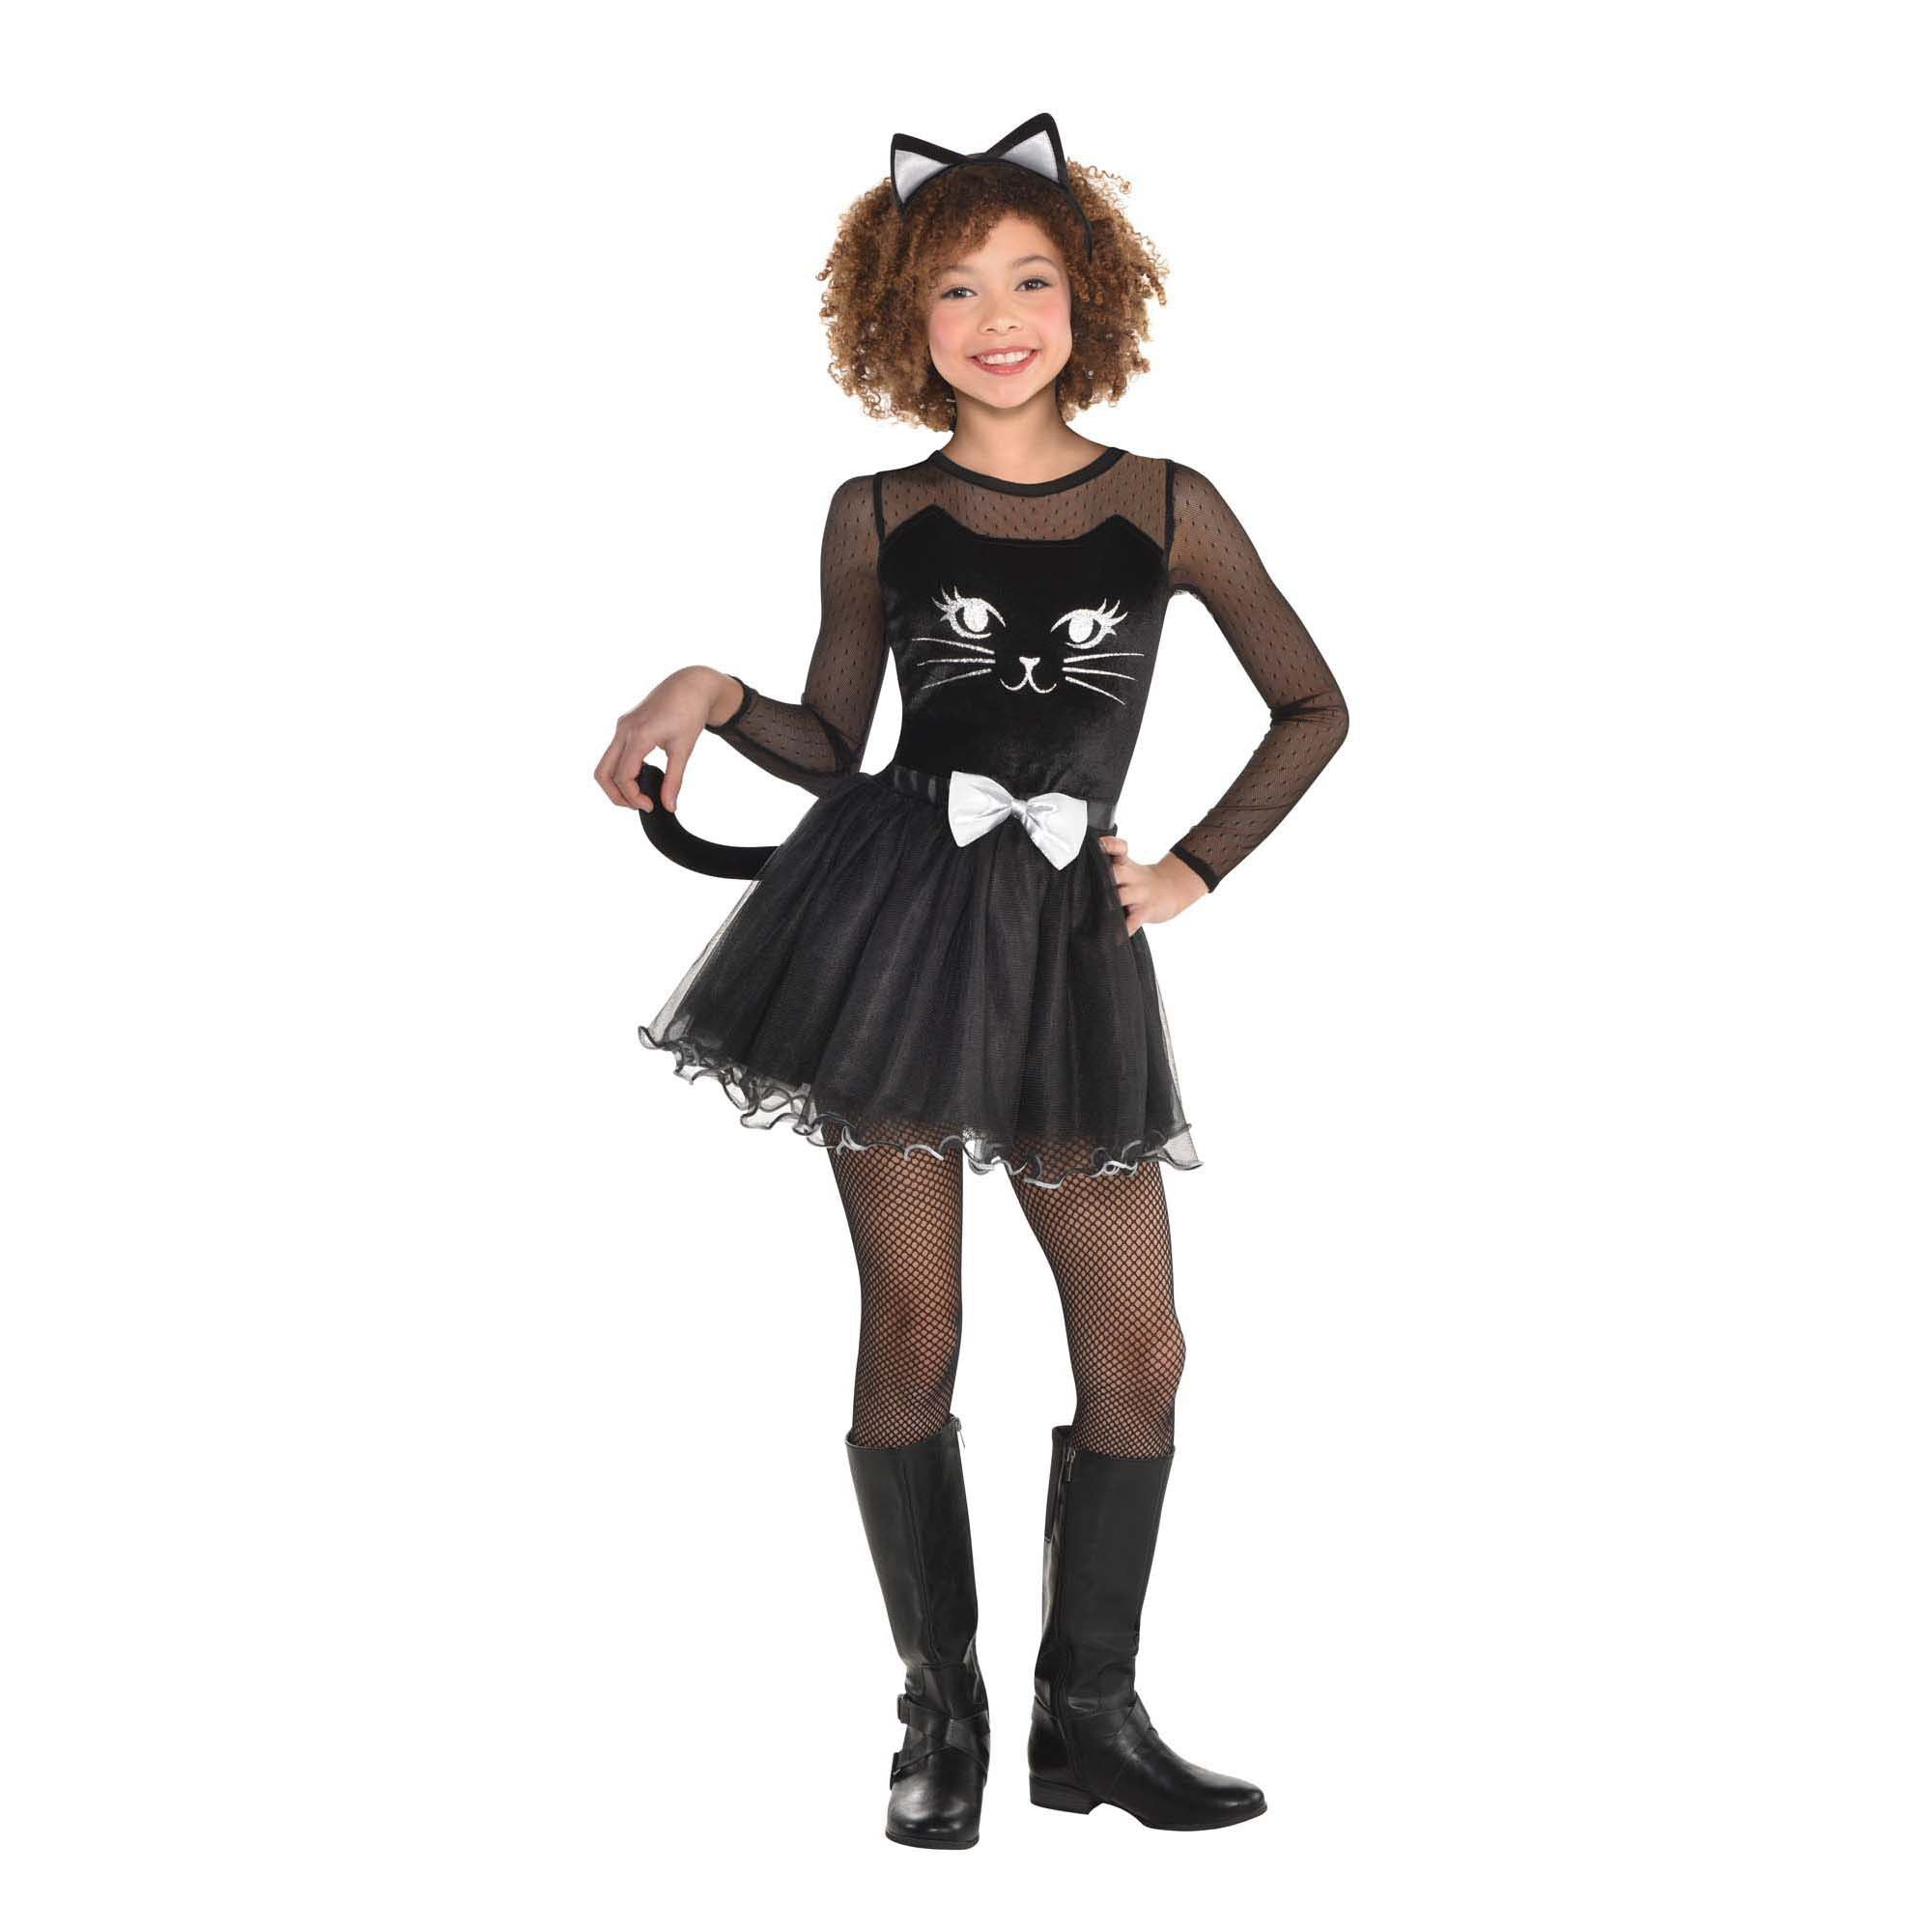 Amscan COSTUMES Small (4-6) Girl's Kitty Kat Costume